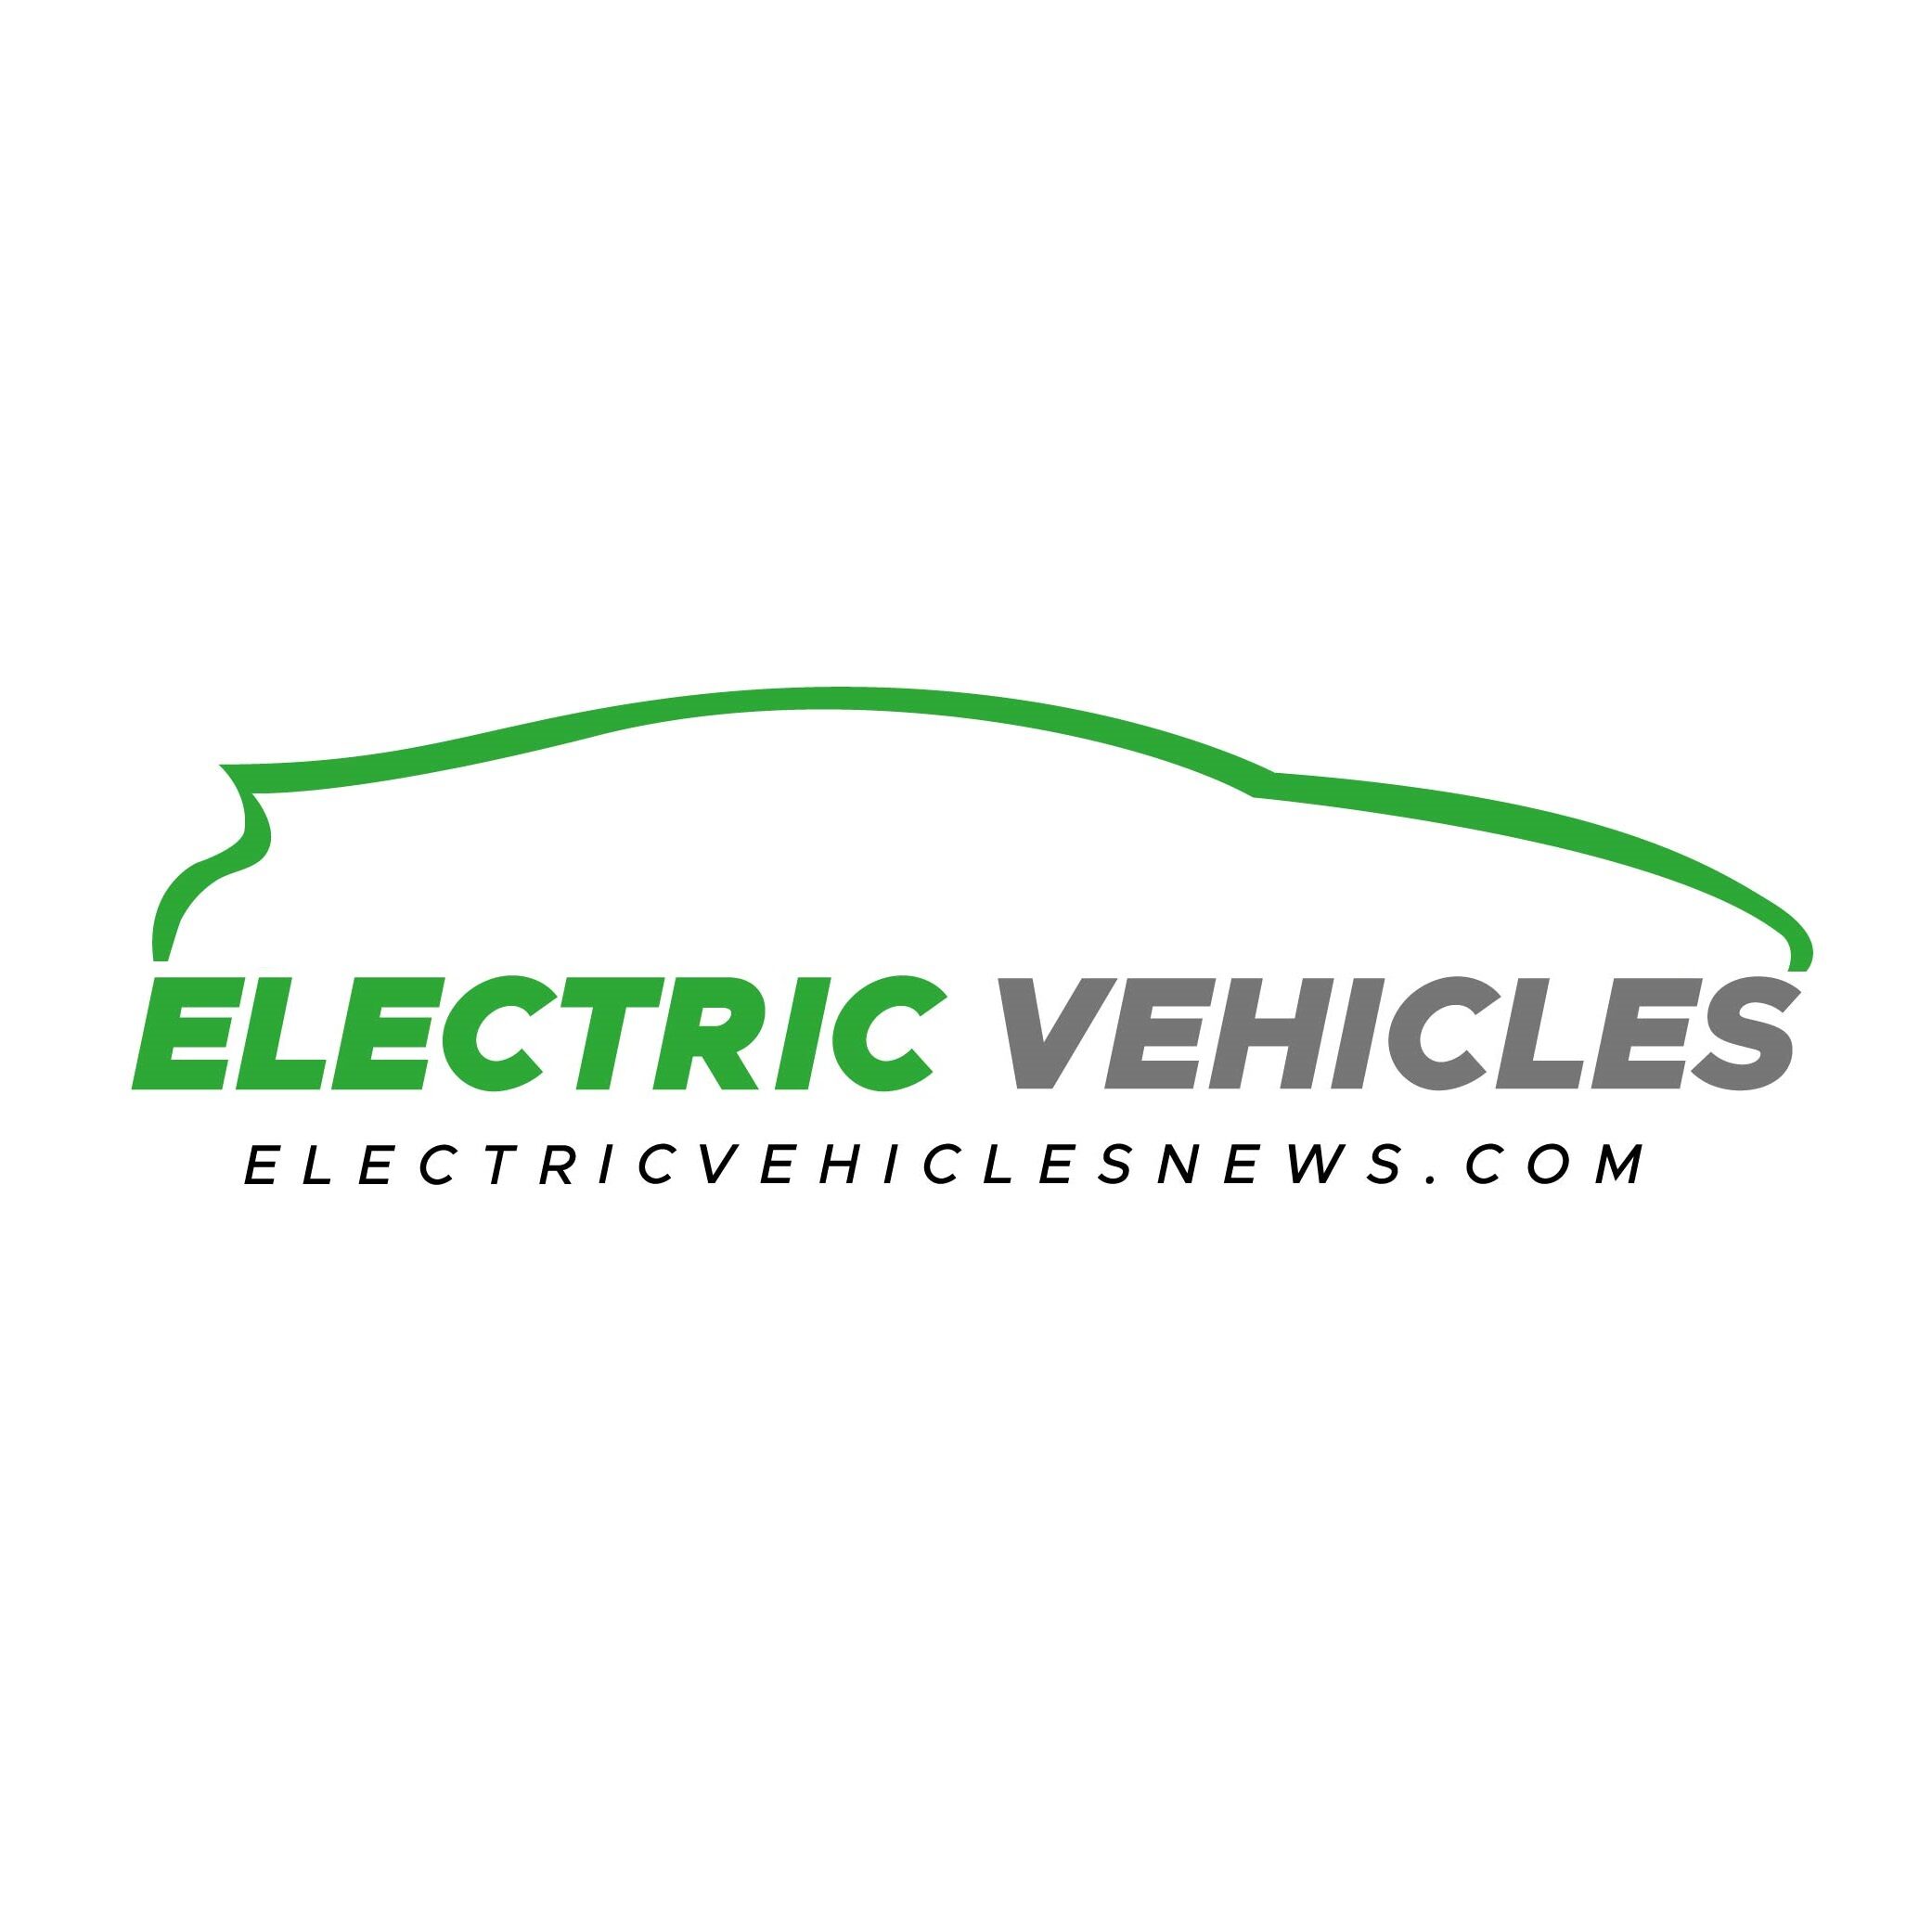 Electric Vehicles News